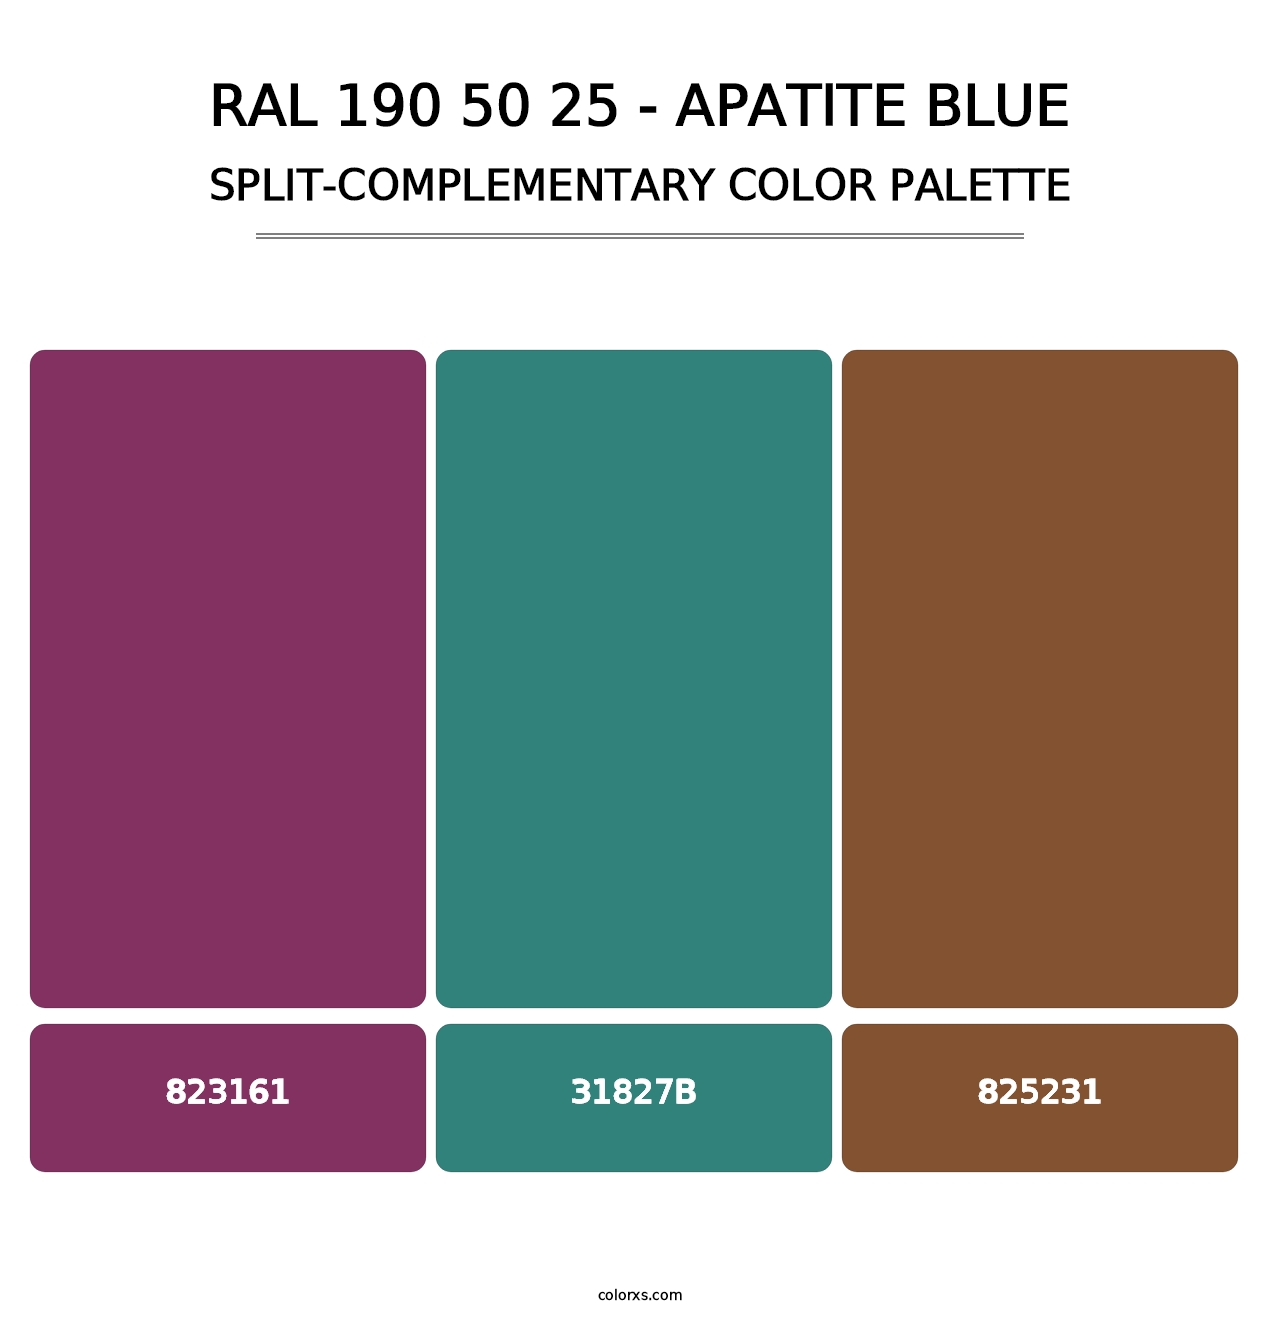 RAL 190 50 25 - Apatite Blue - Split-Complementary Color Palette